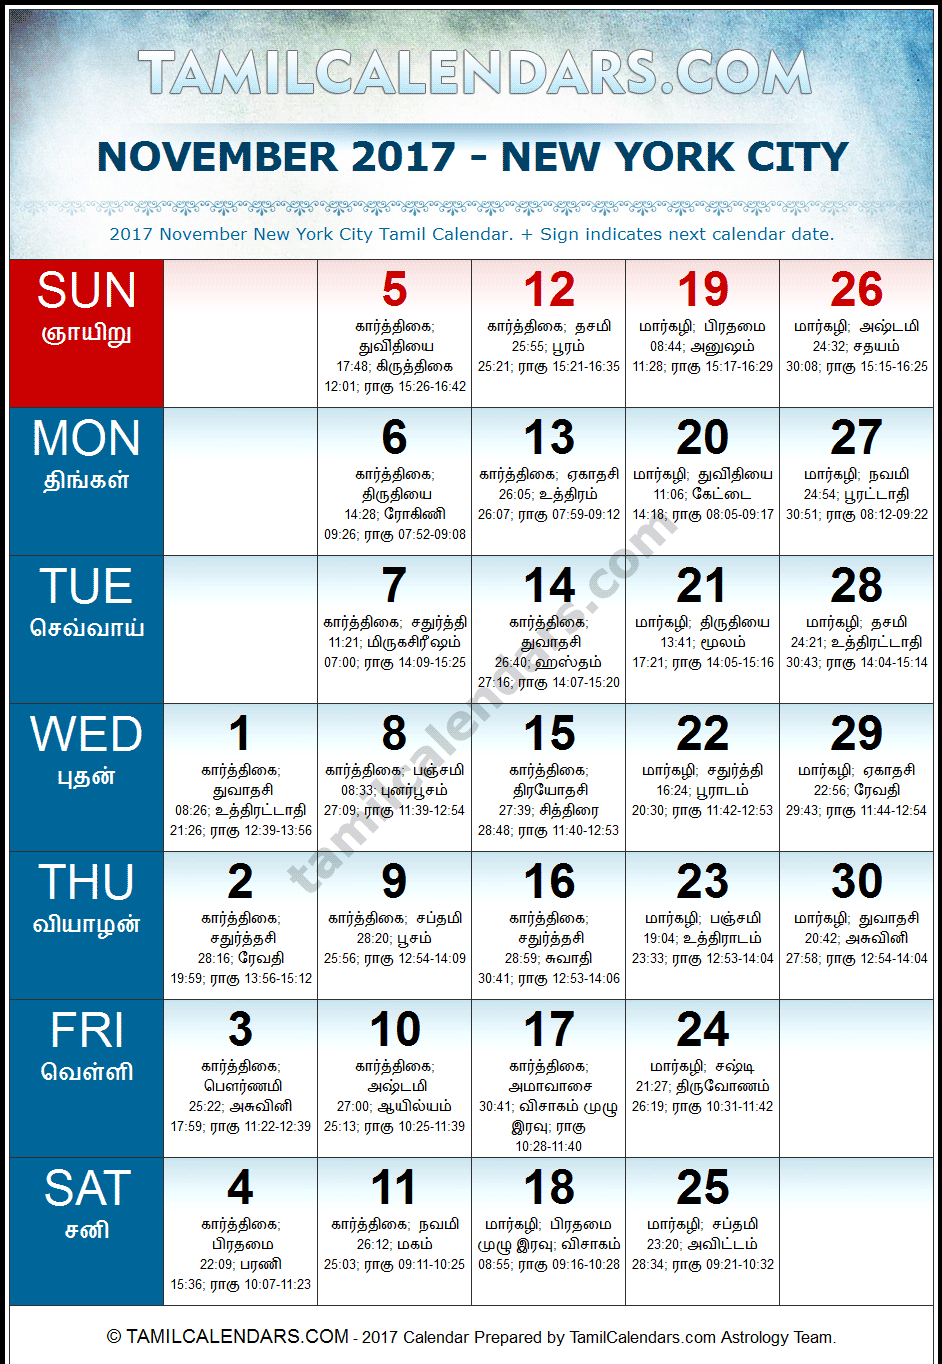 November 2017 Tamil Calendar for New York, USA